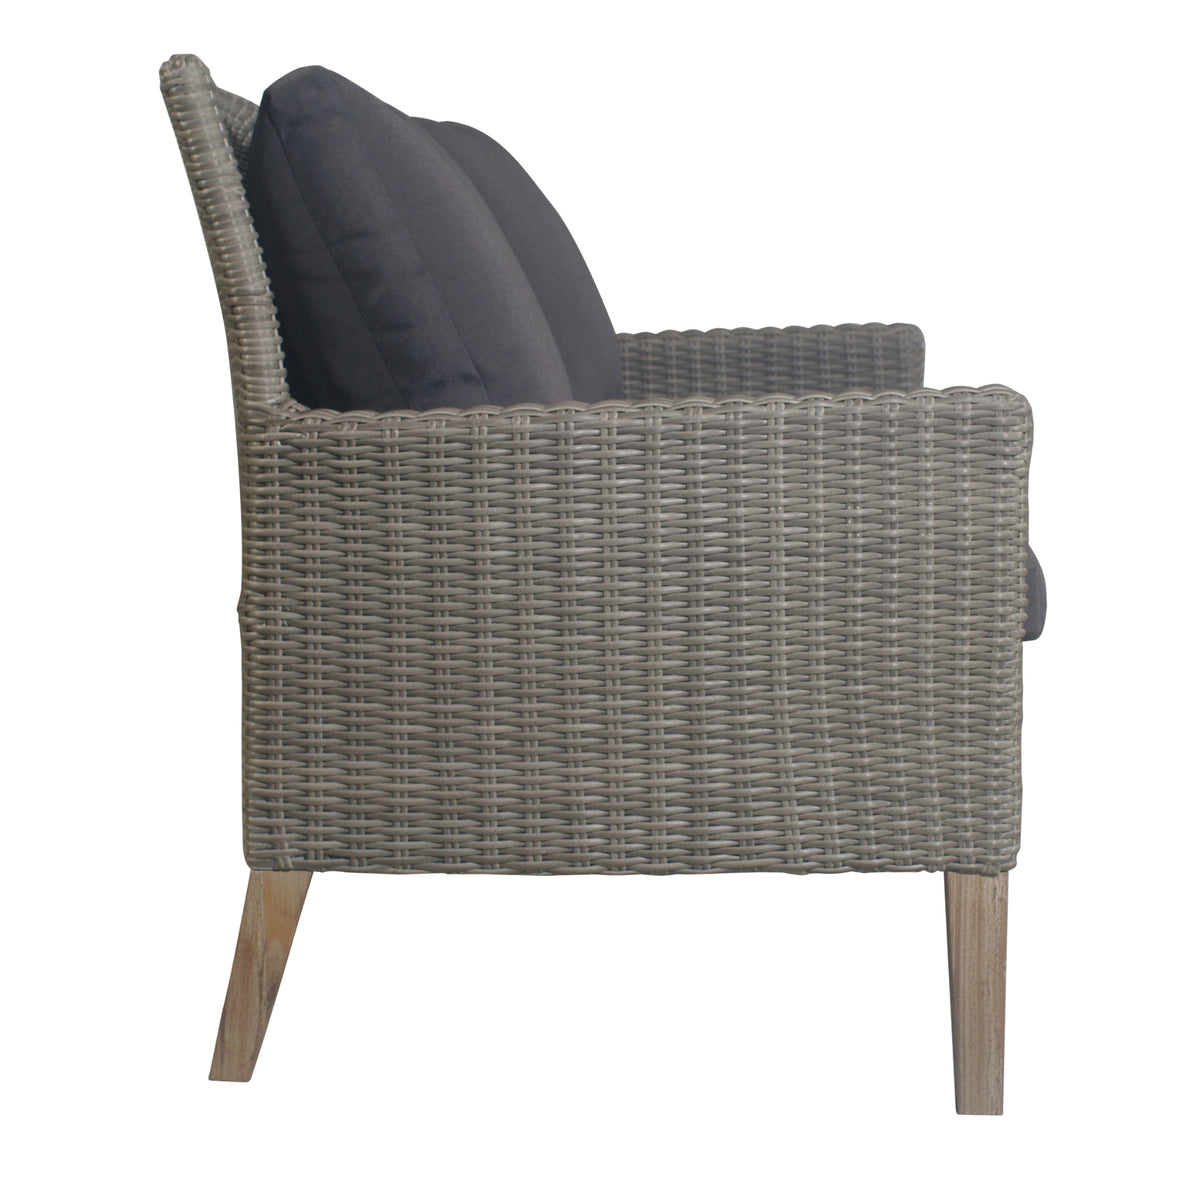 Byron 4pc Rattan Outdoor Sofa Set 2 Seater Wicker Lounge Grey Coffee Table 